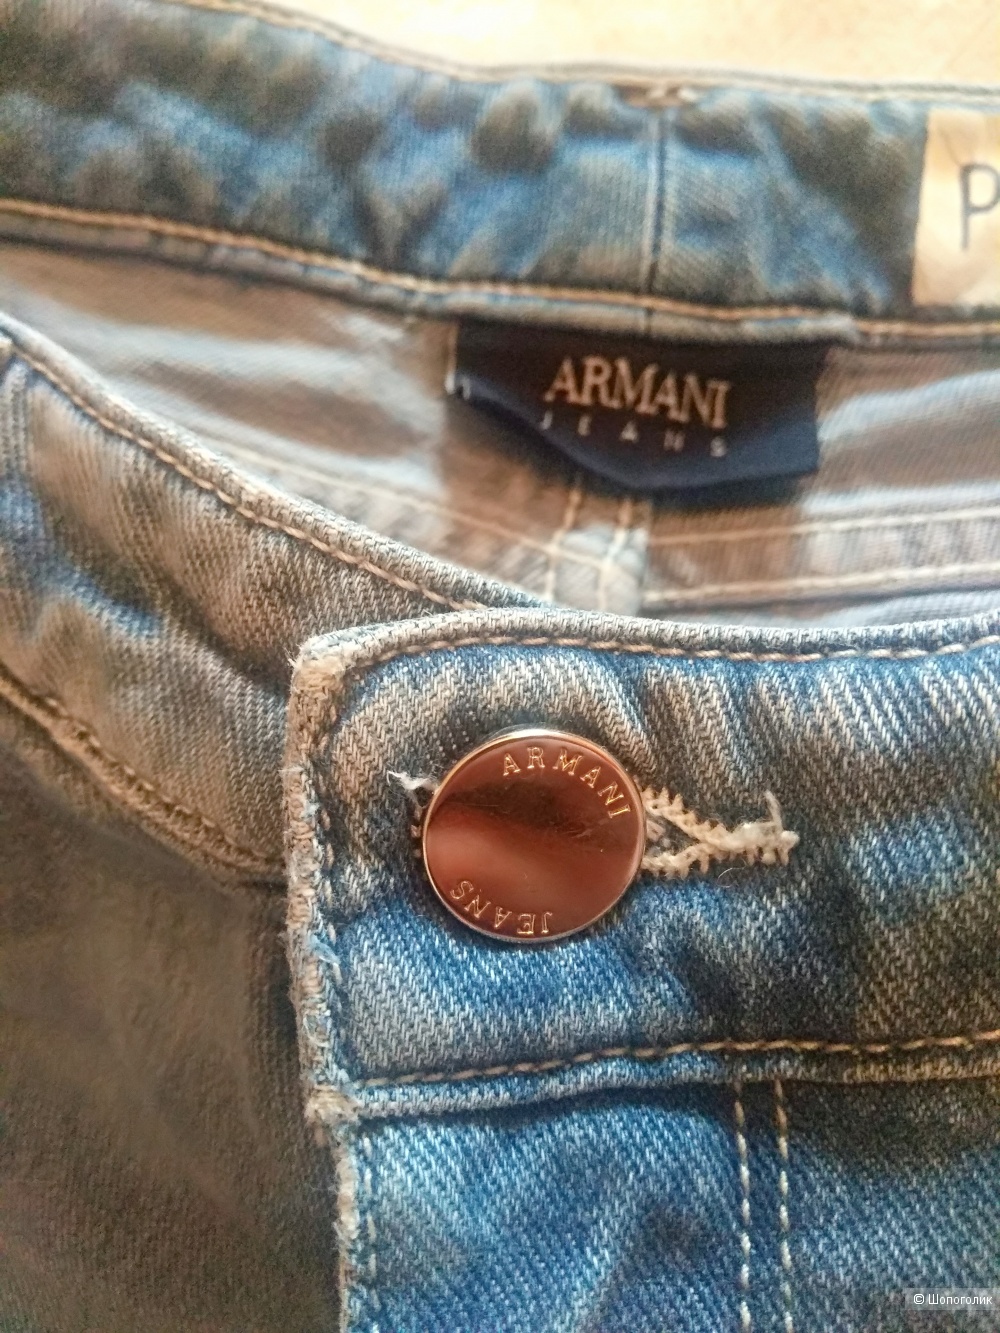 Сет джинсы Armani и блузка Massimo Dutti, размер 42-44 (s)